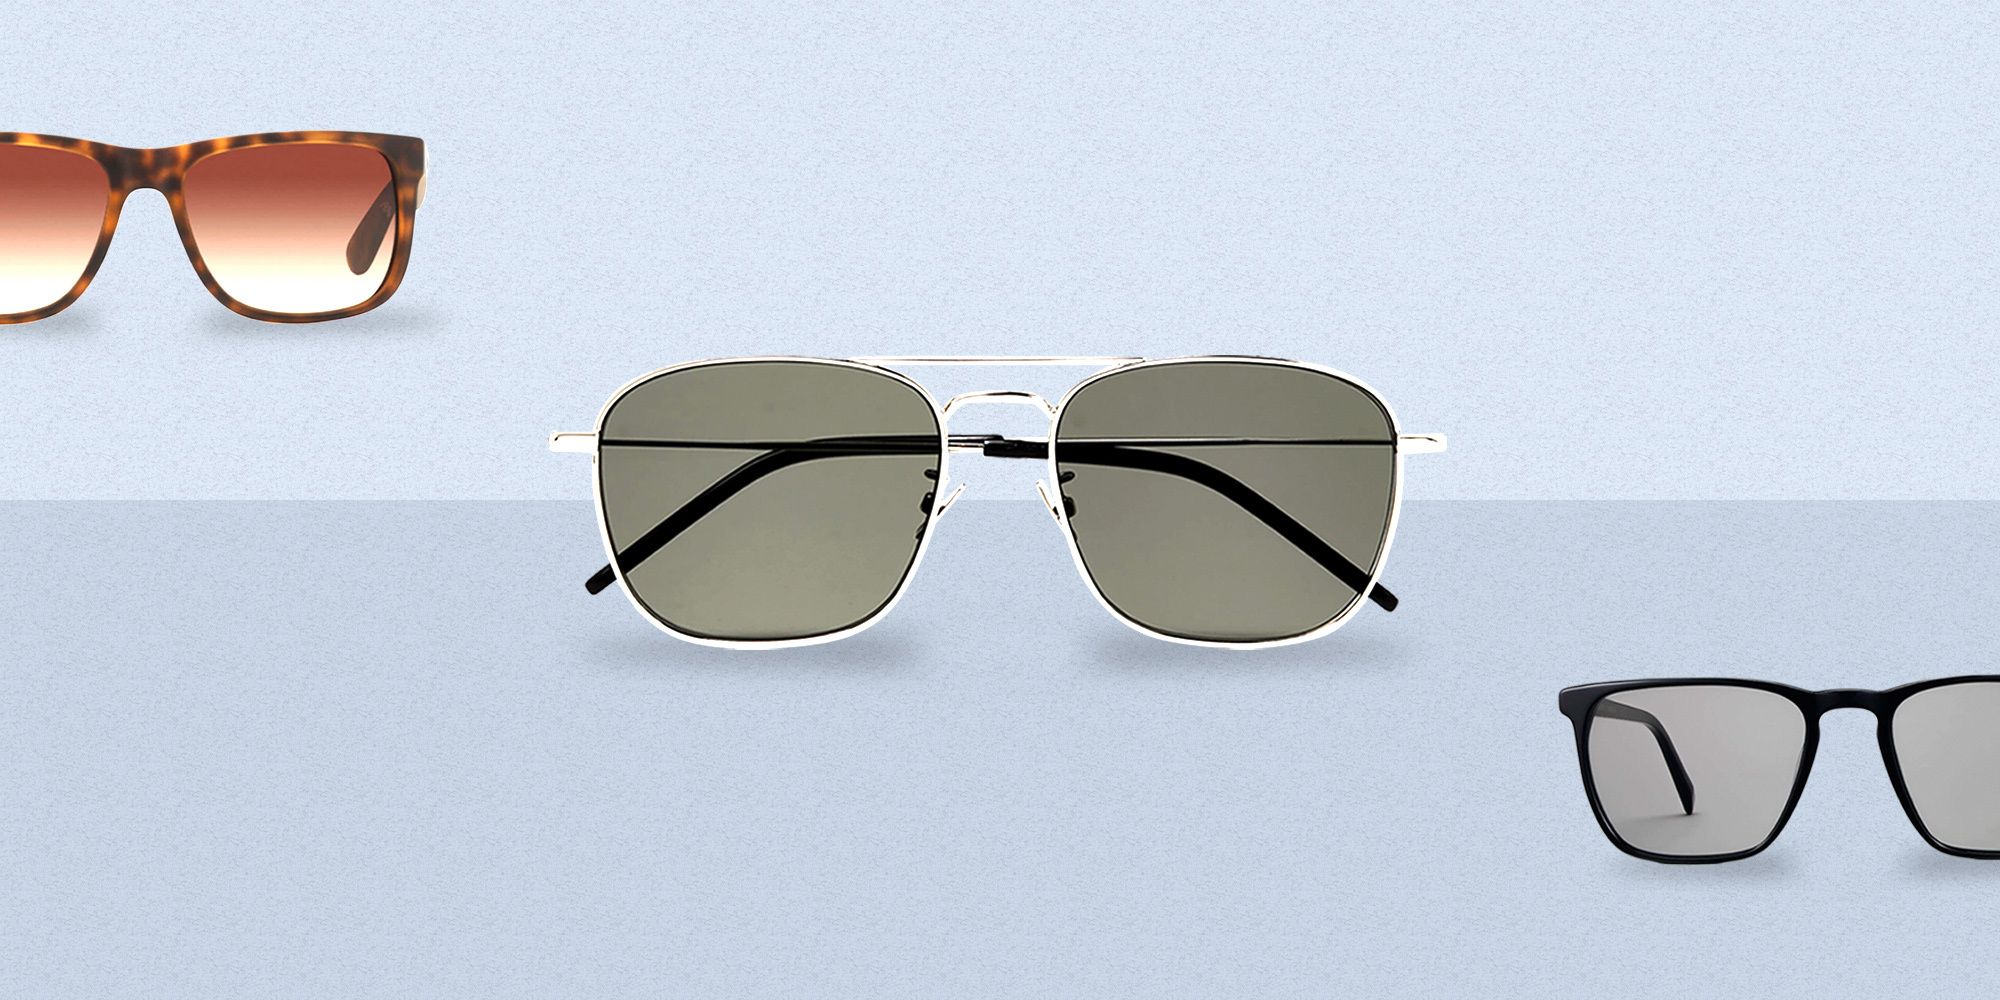 Sunglasses Types 2020